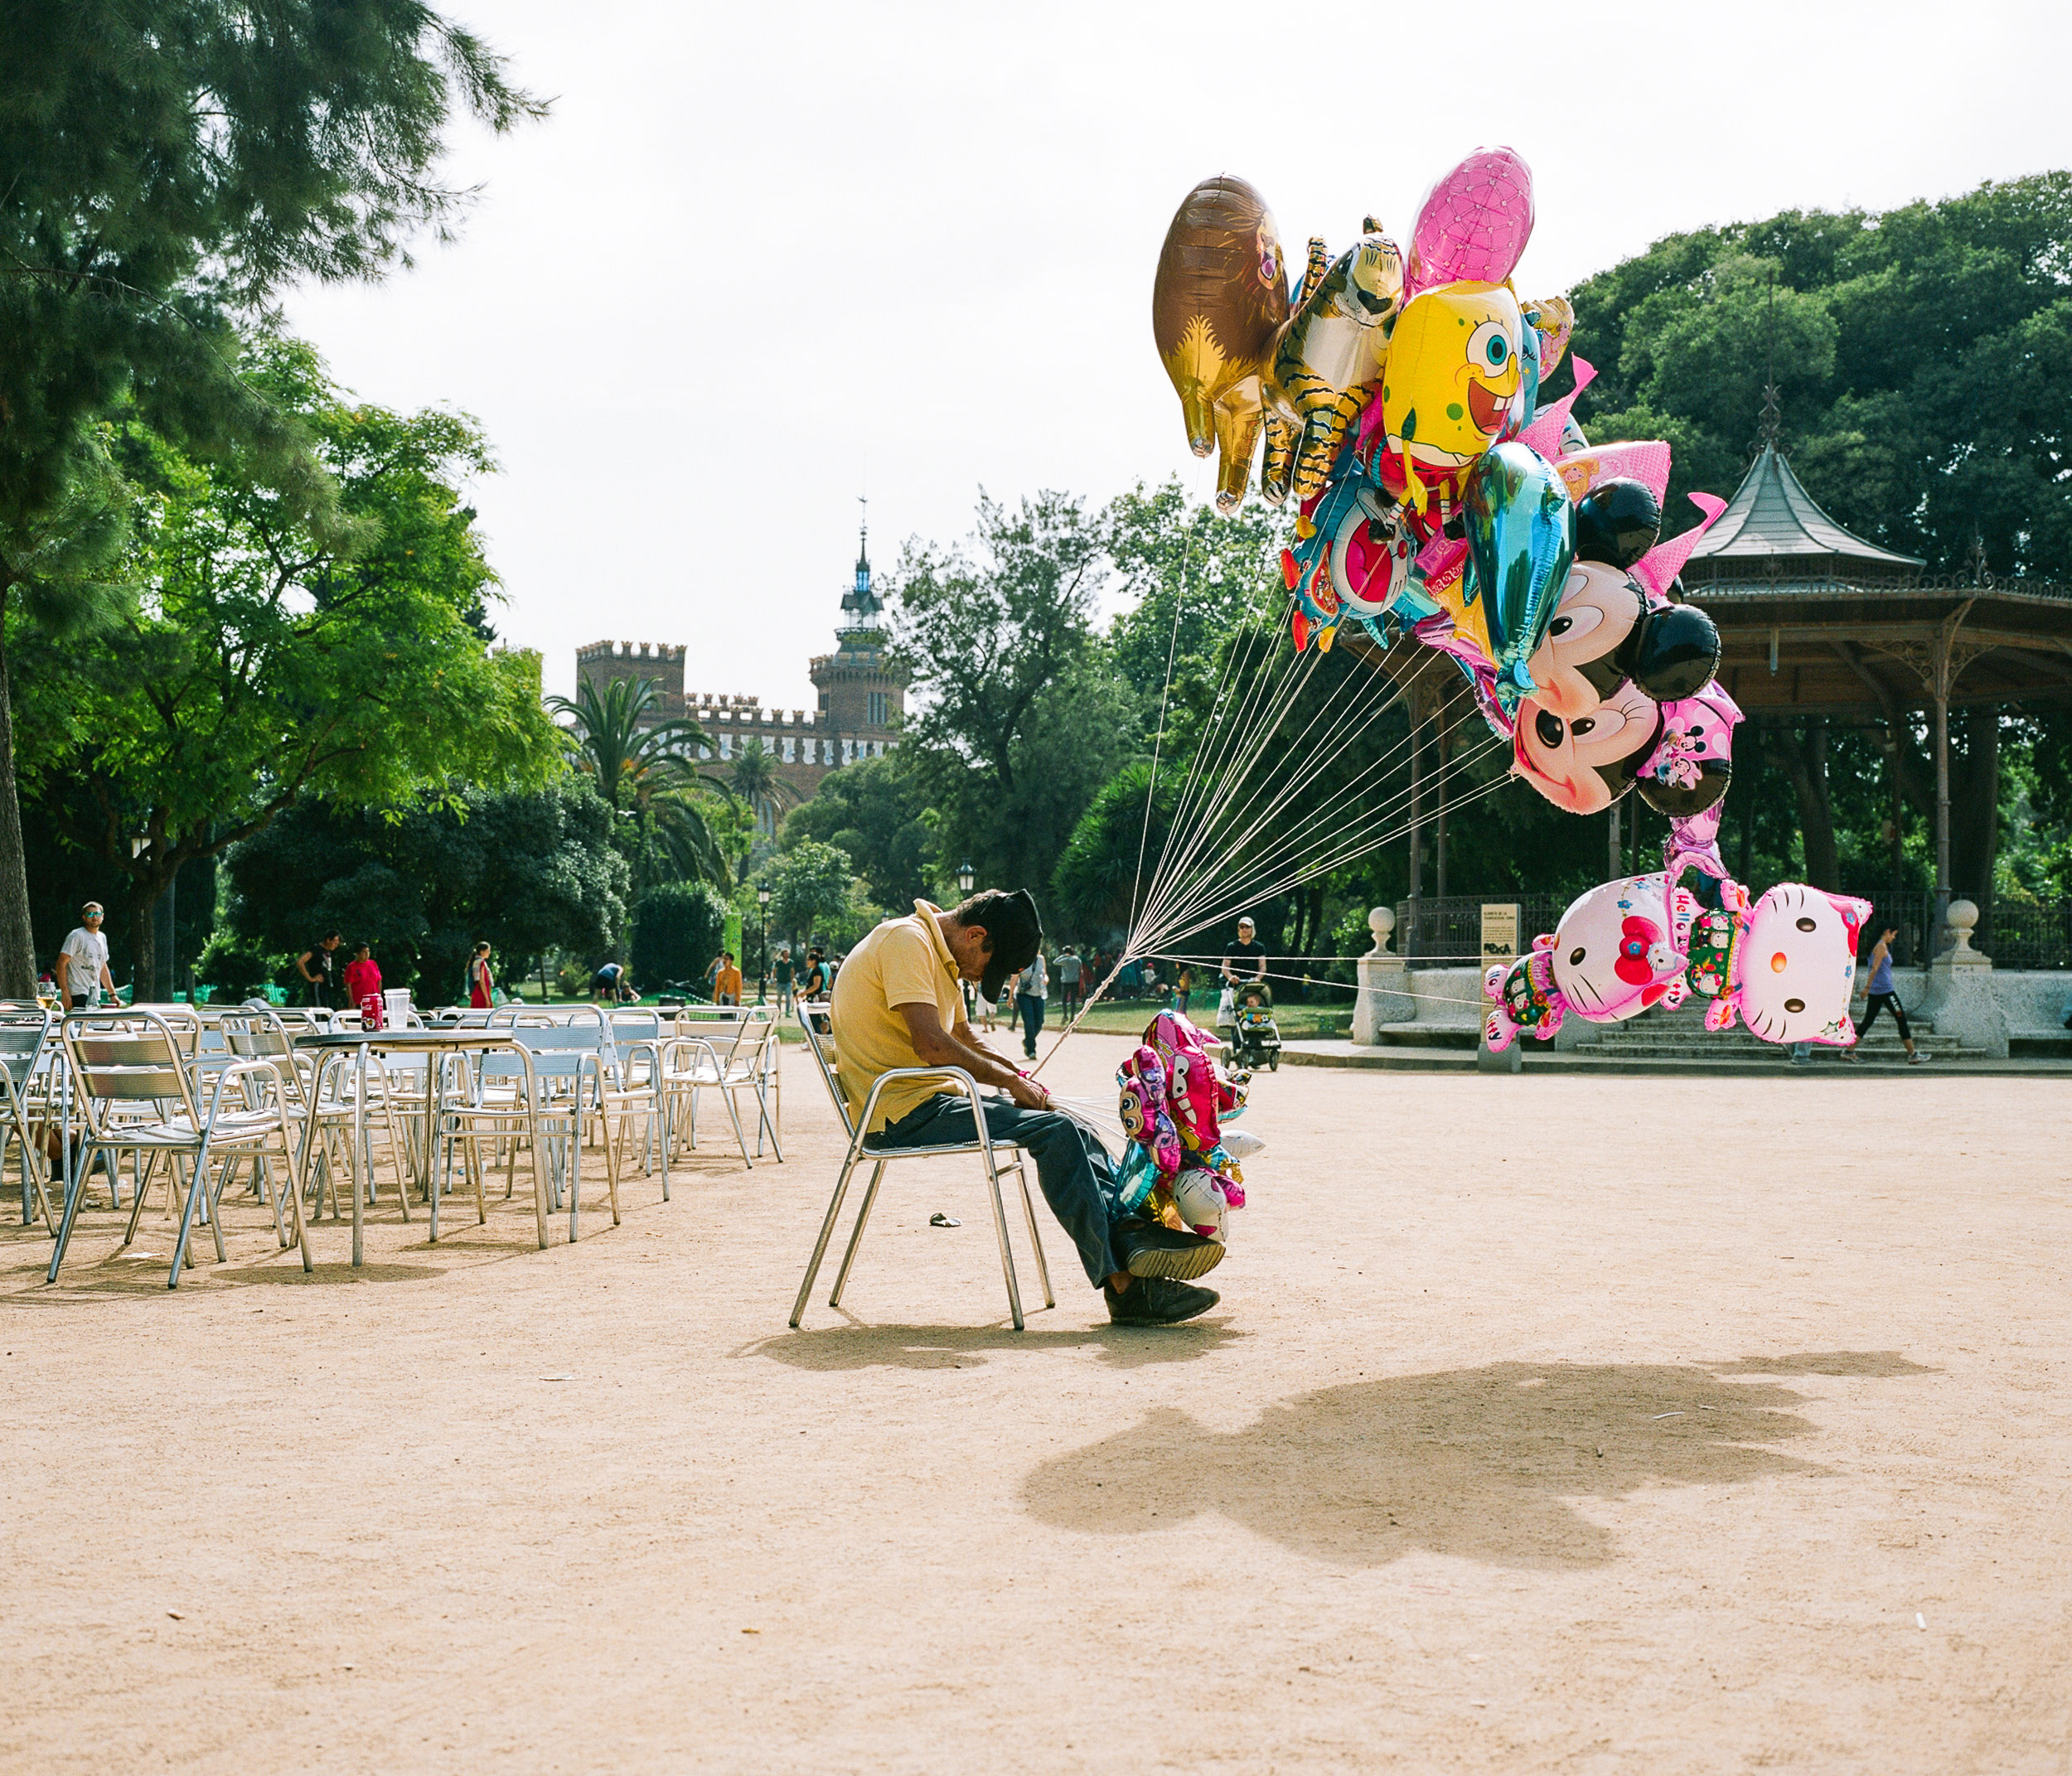 Baloon man asleep in the park in Barcelona, Spain